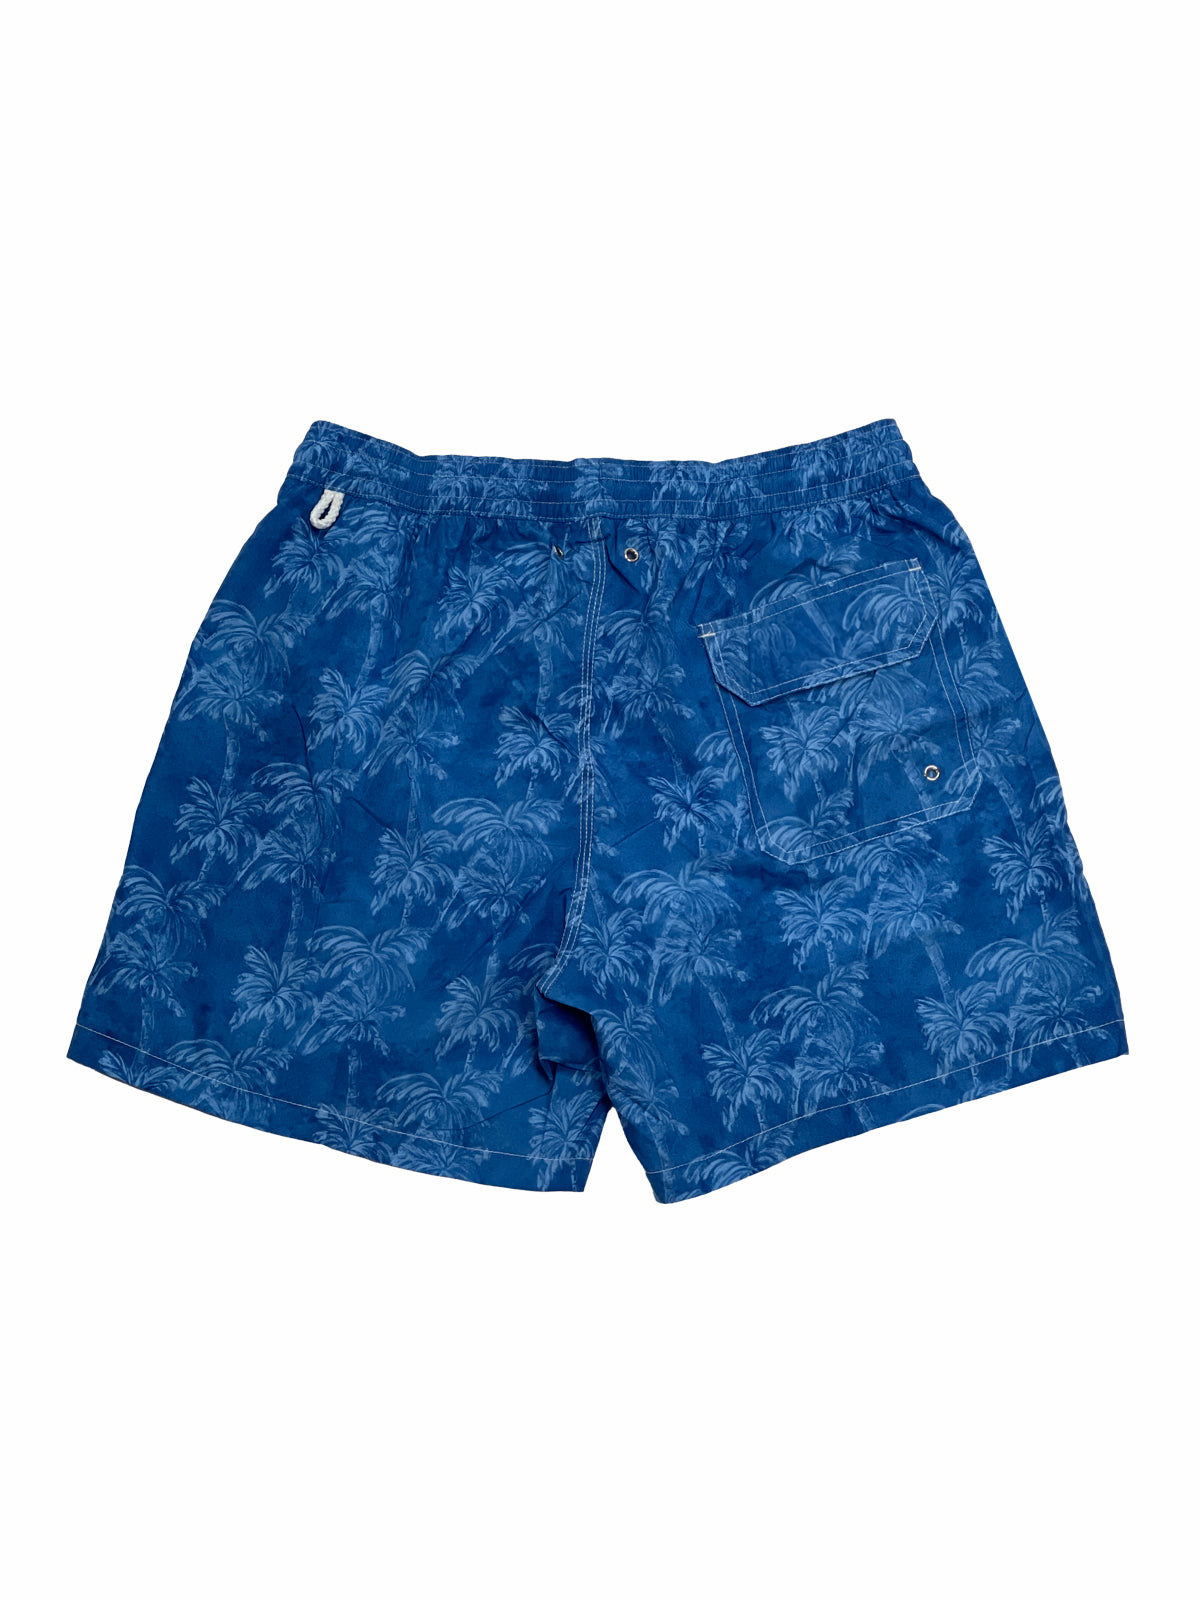 Blue Palmtree Printed Swim Shorts